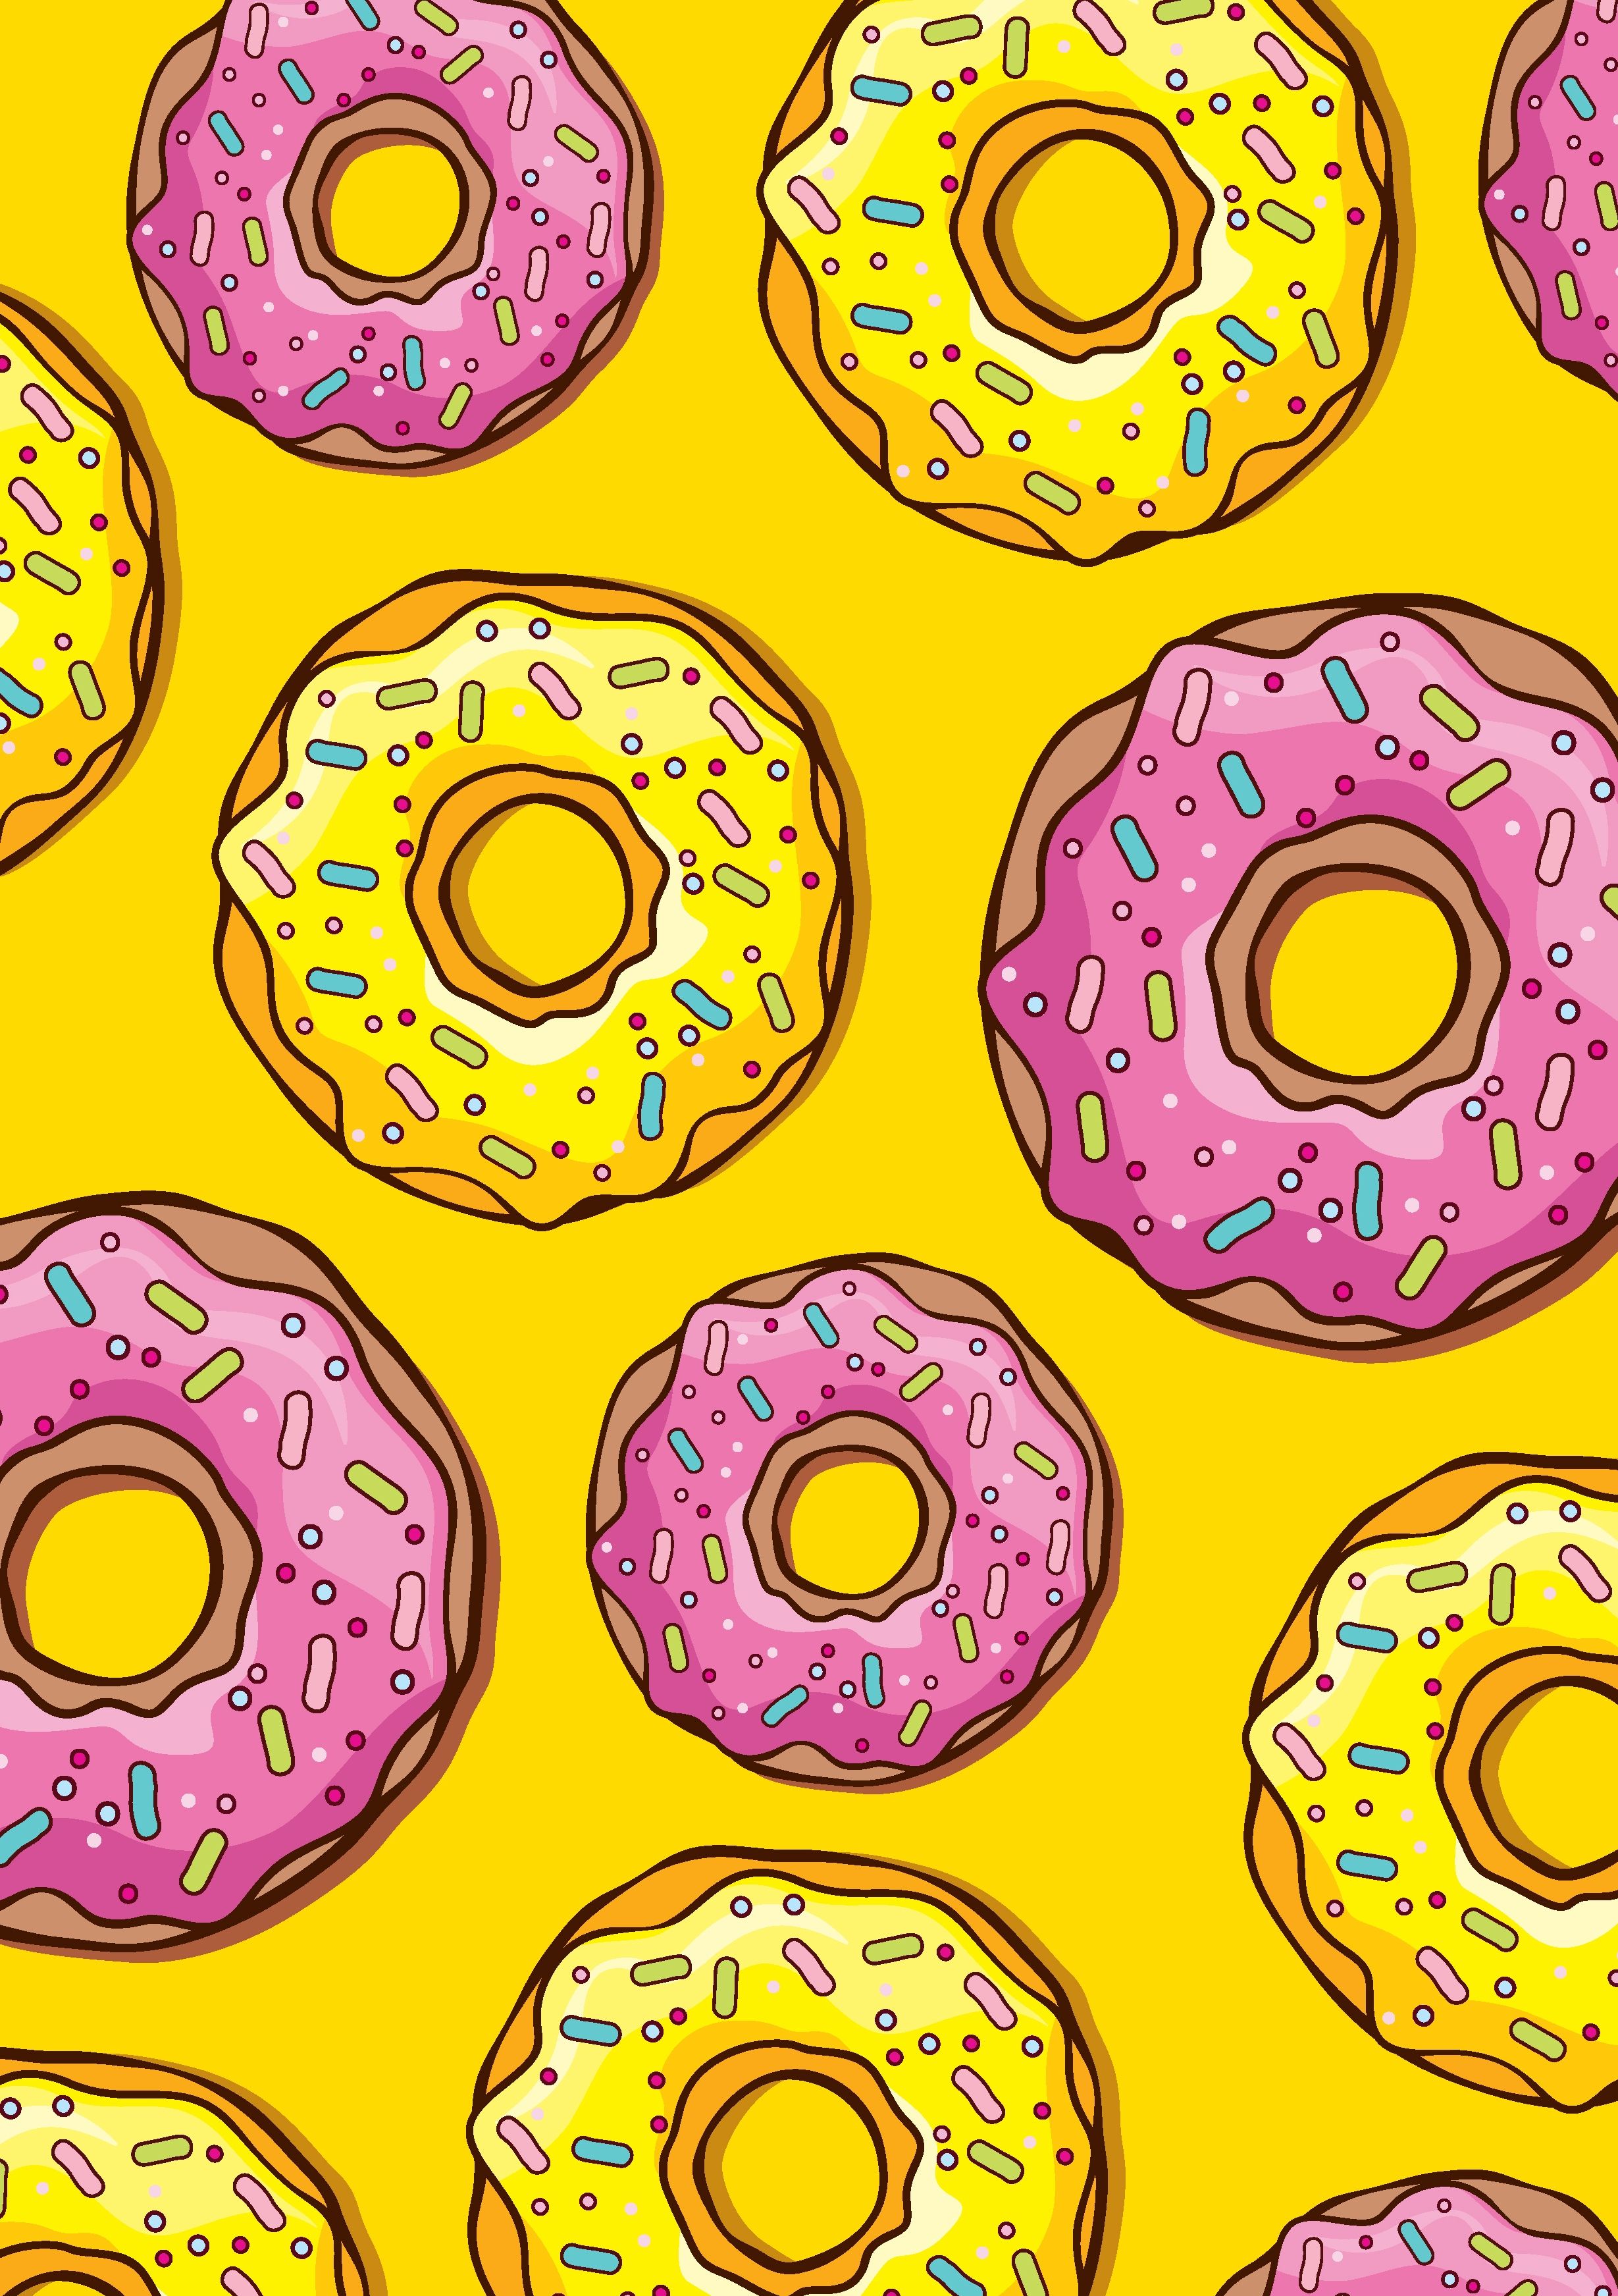 Harrys Zap On Pijamas In Donut Drawing Candy